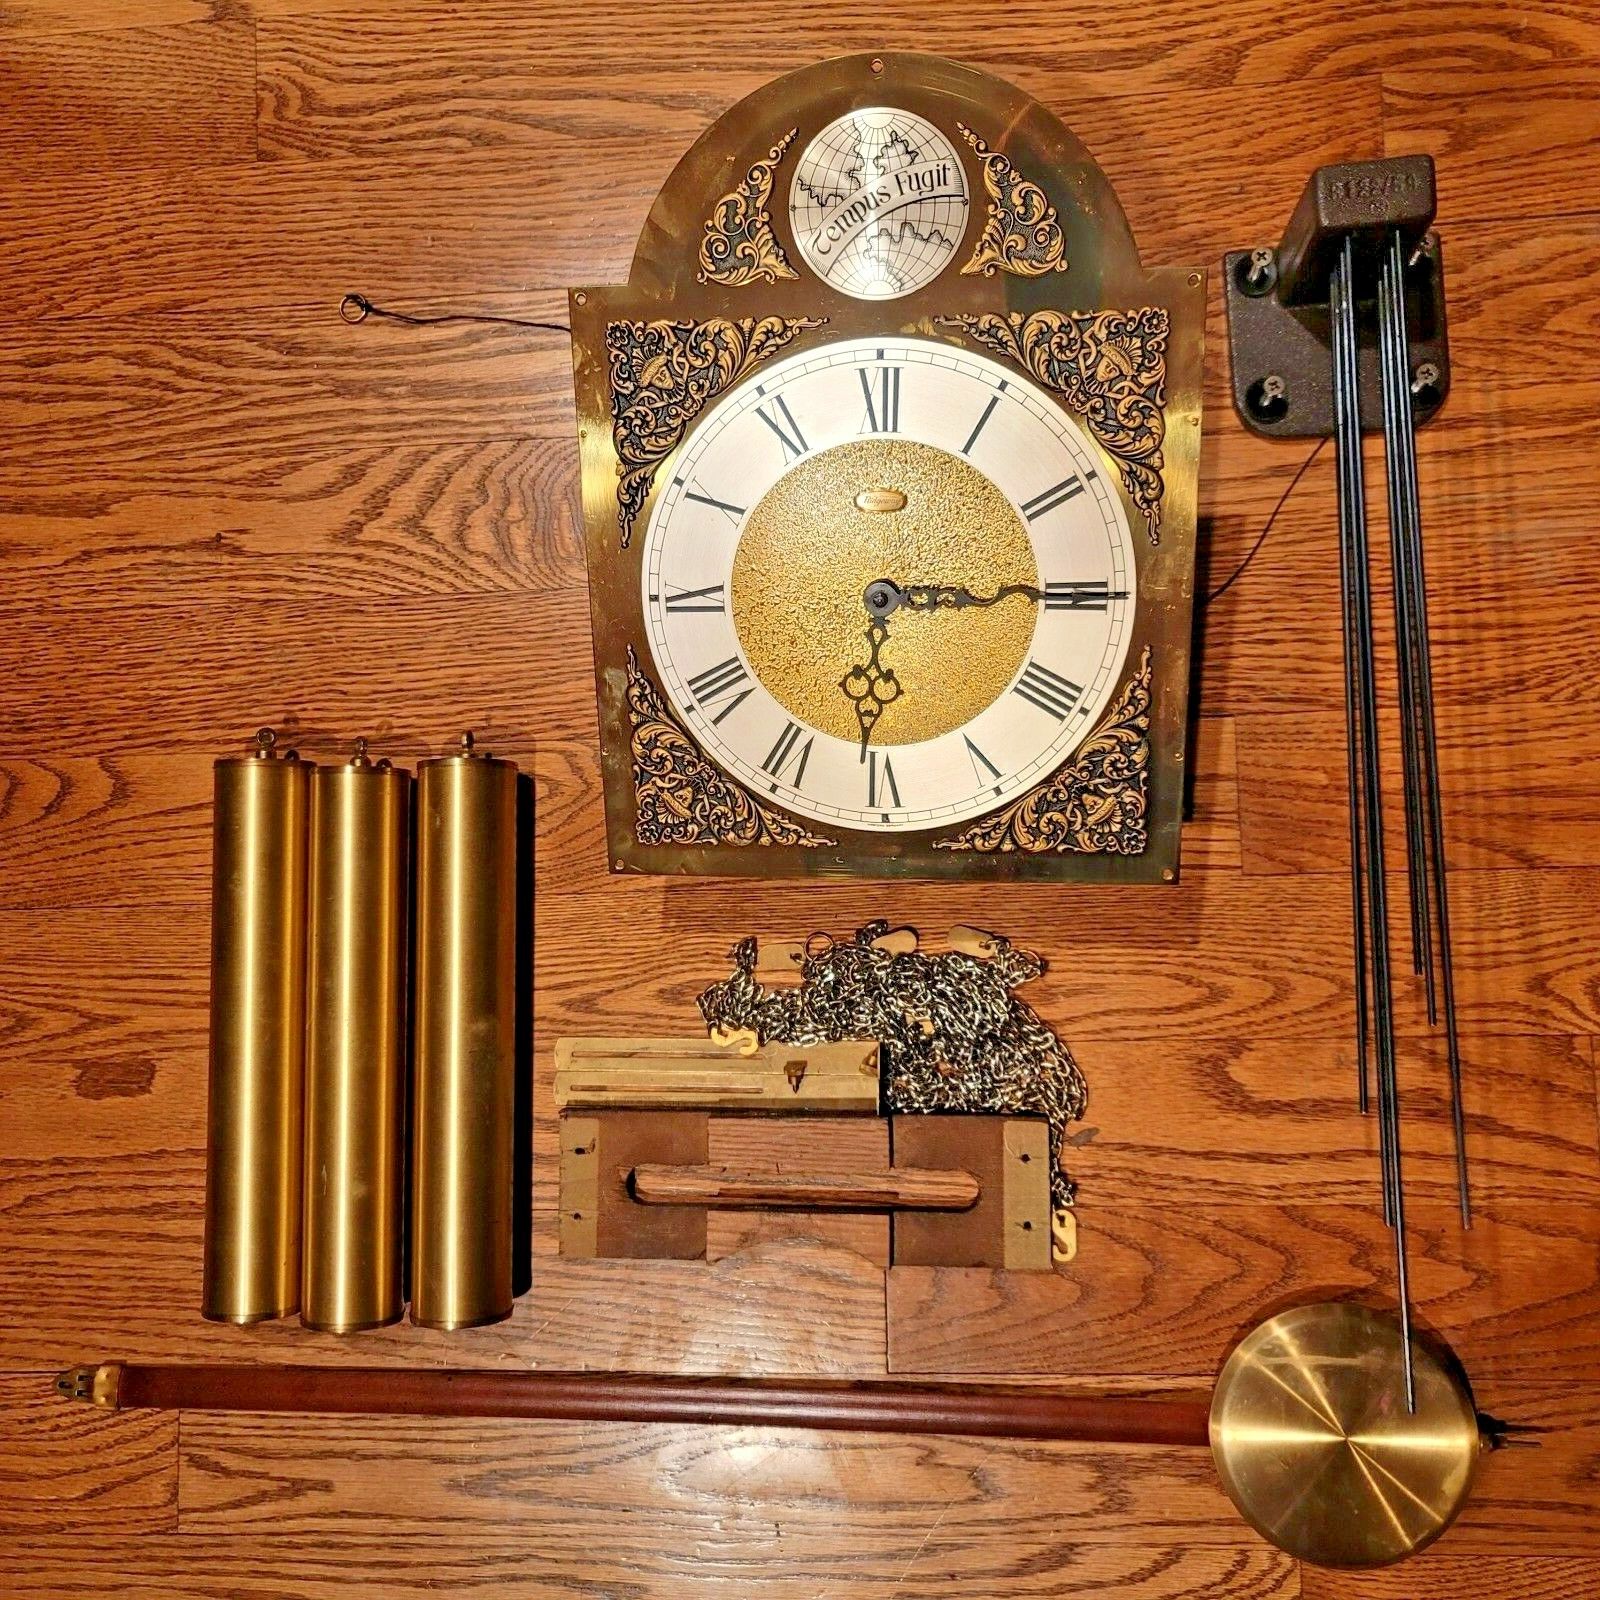 Ridgeway Grandfather Clock E122 Face Urgos UW 32/1A Movement E Weights Pendulum